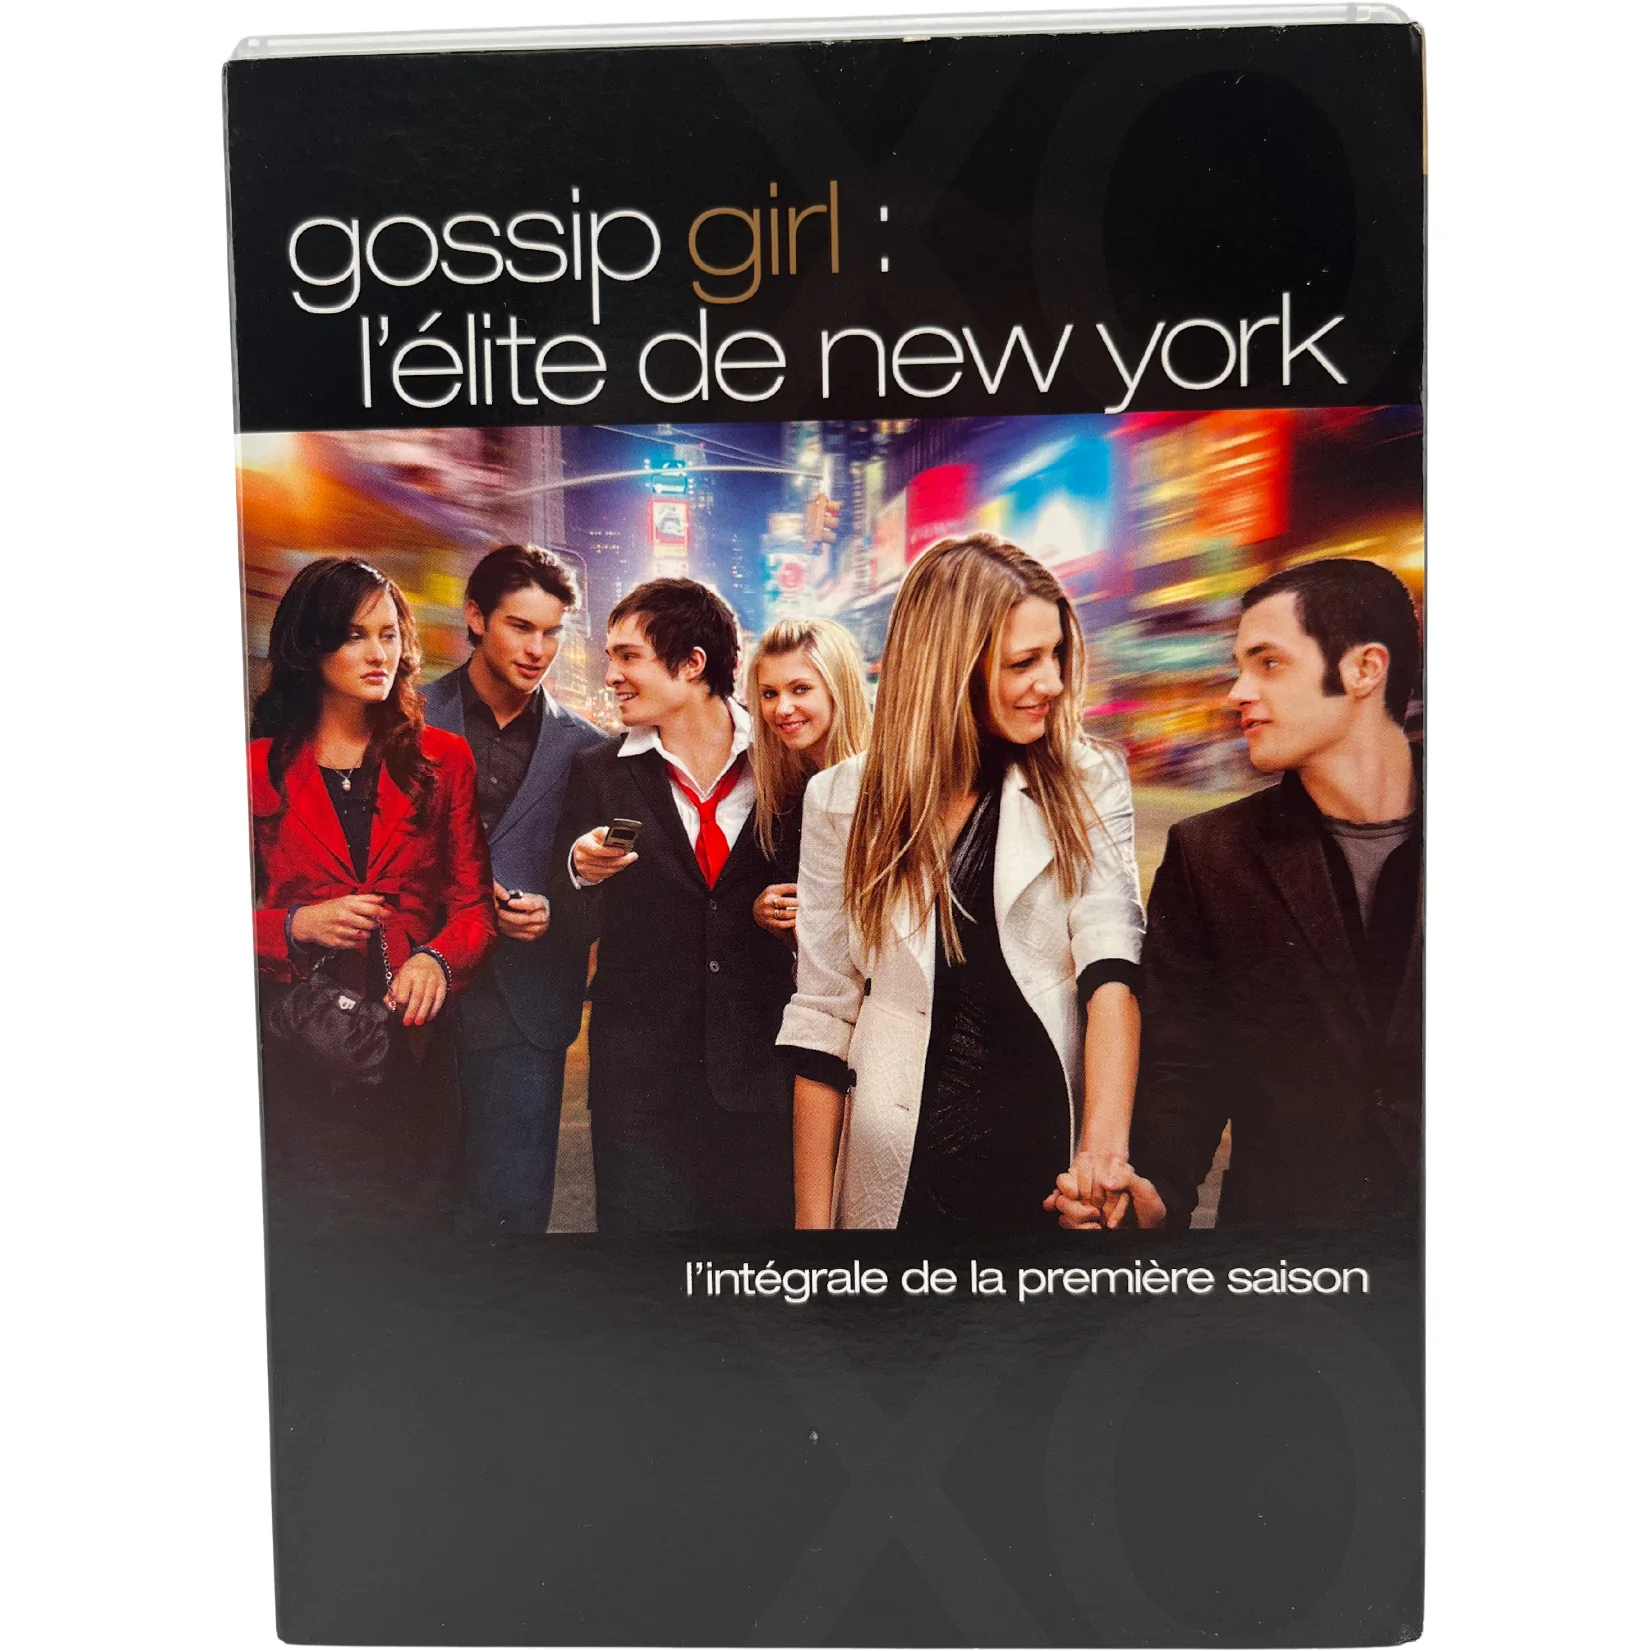 Gossip Girl Season 1 png images